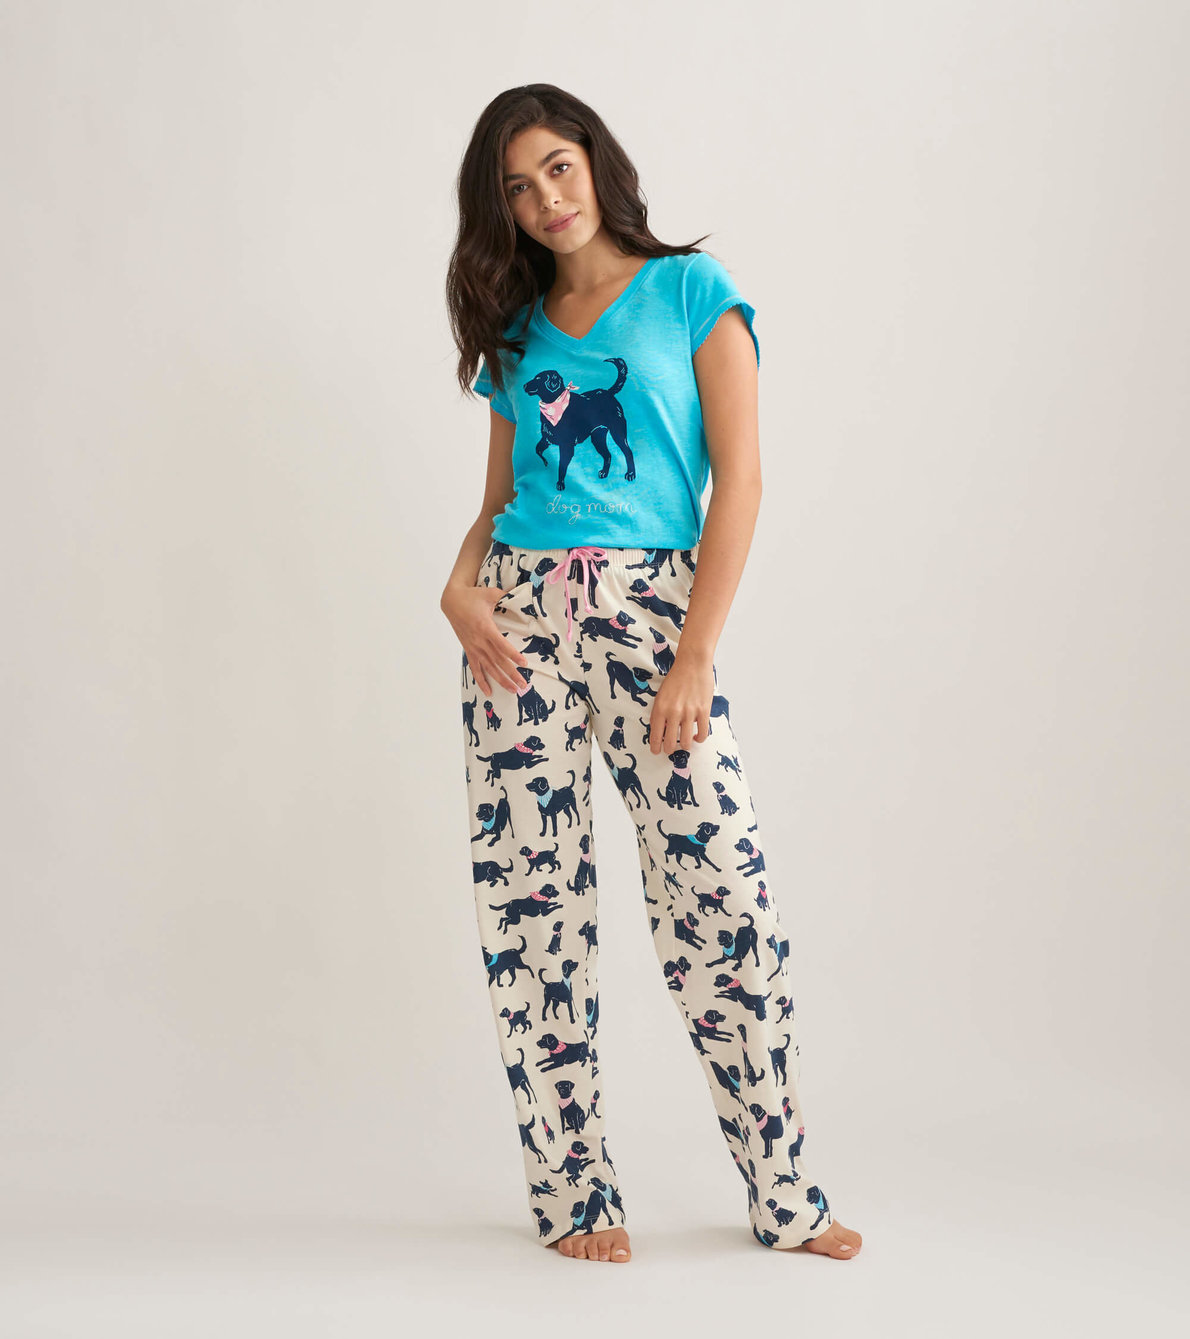 View larger image of Bandana Labs Women's Tee and Pants Pajama Separates